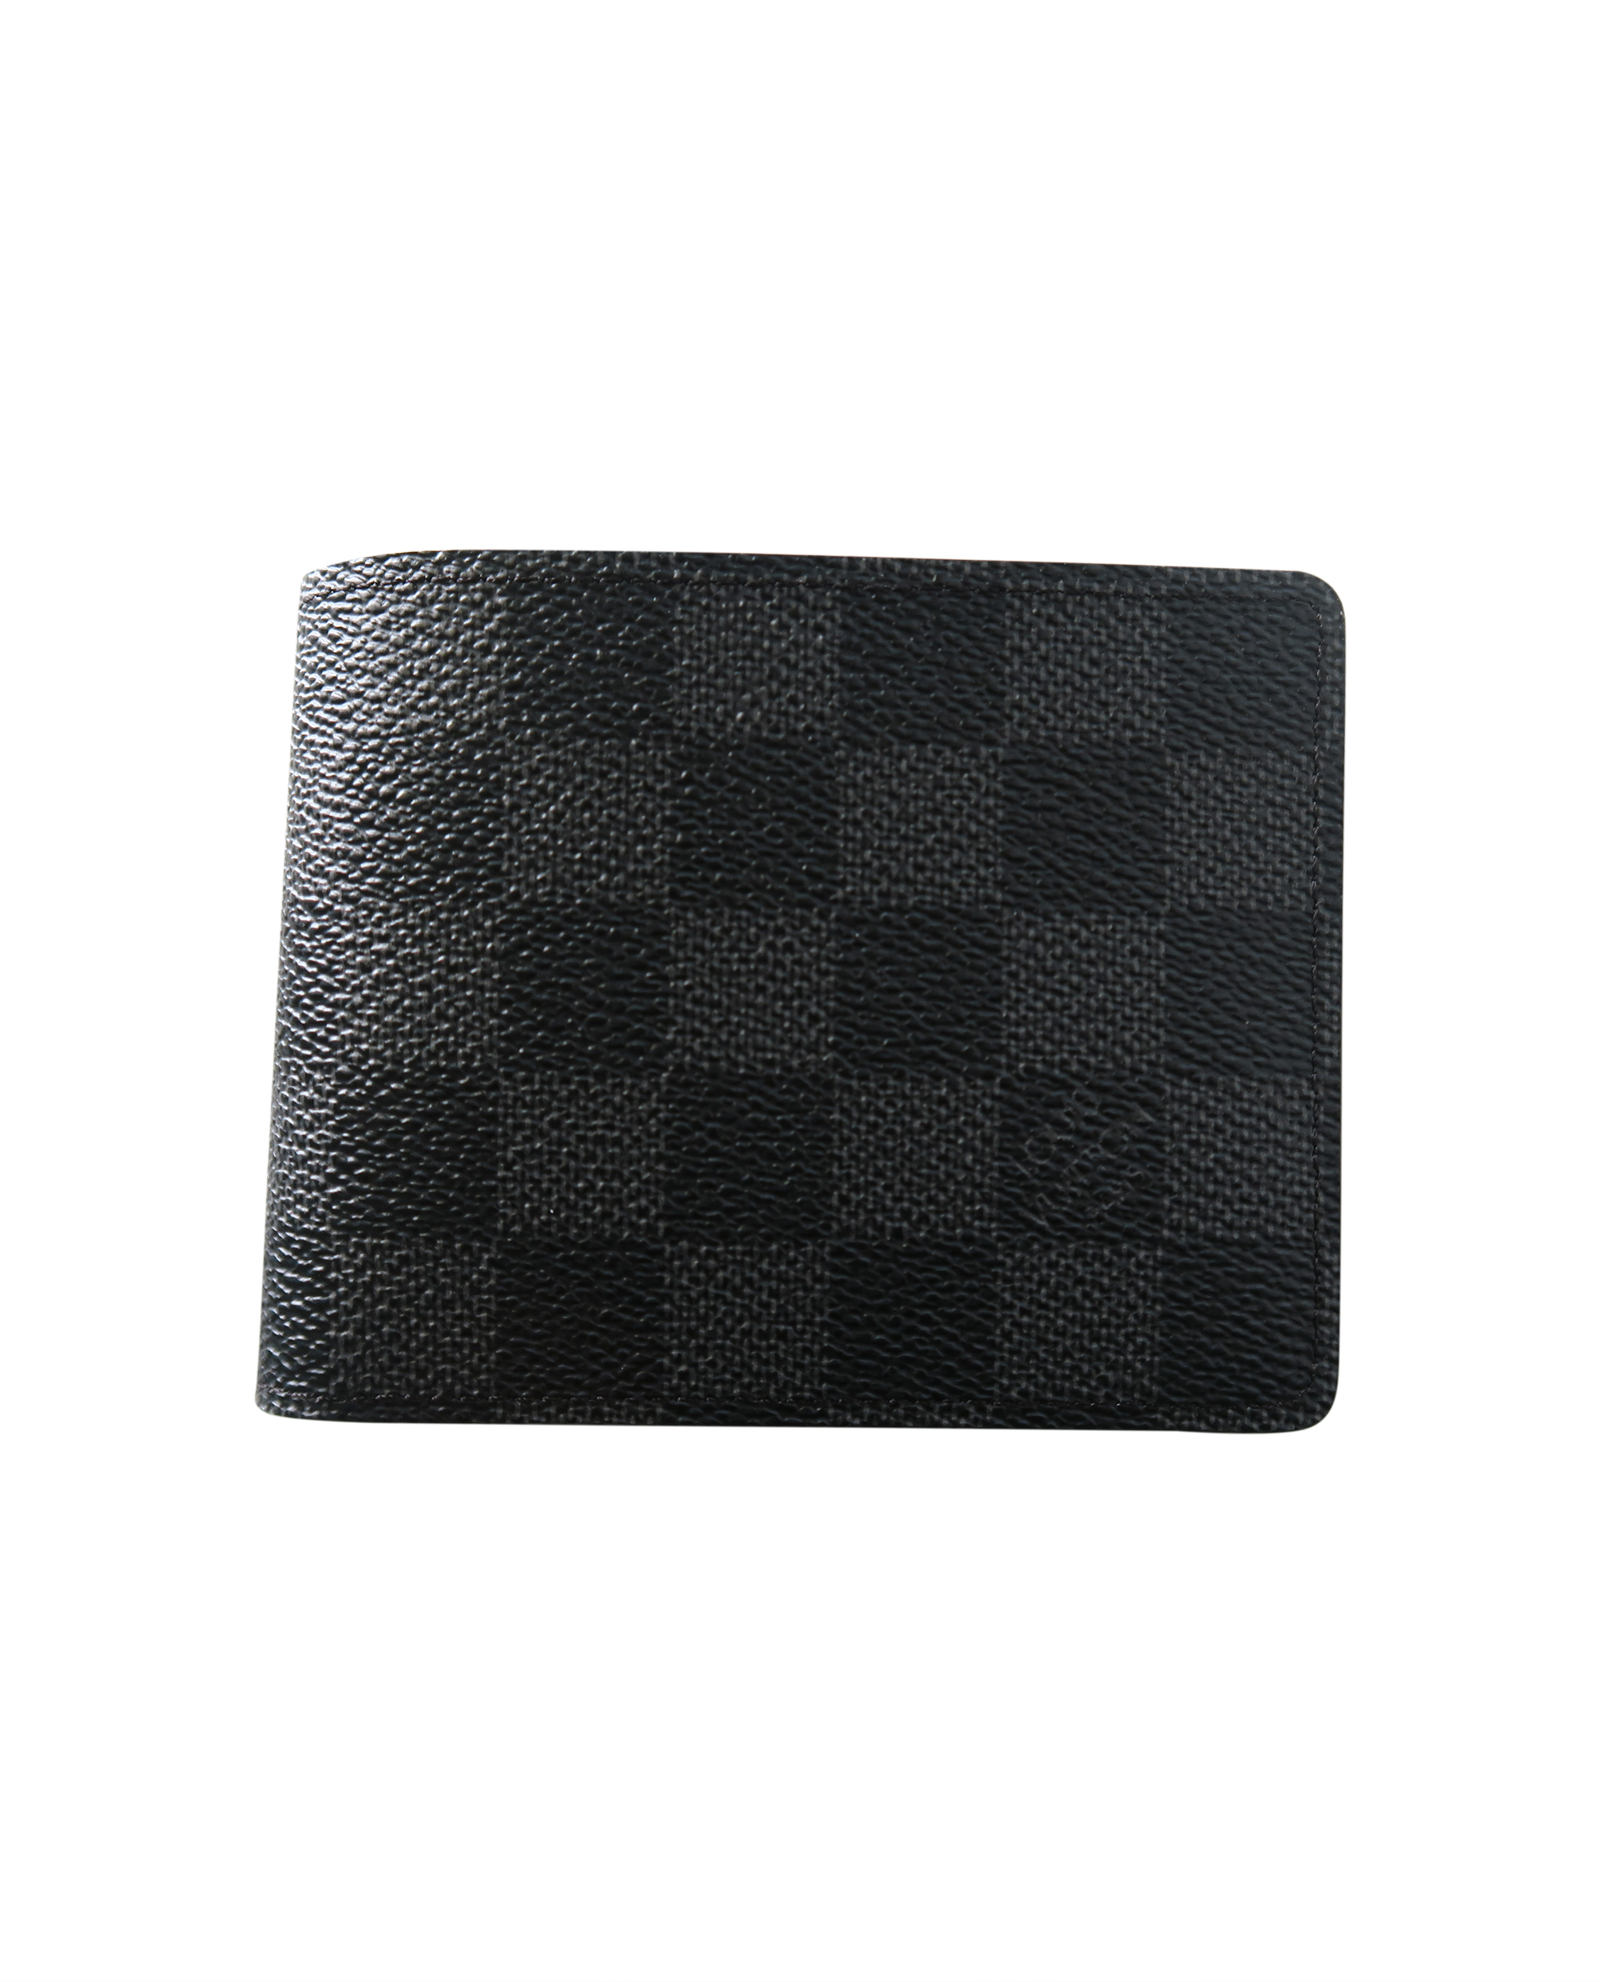 Louis Vuitton Slender ID Wallet